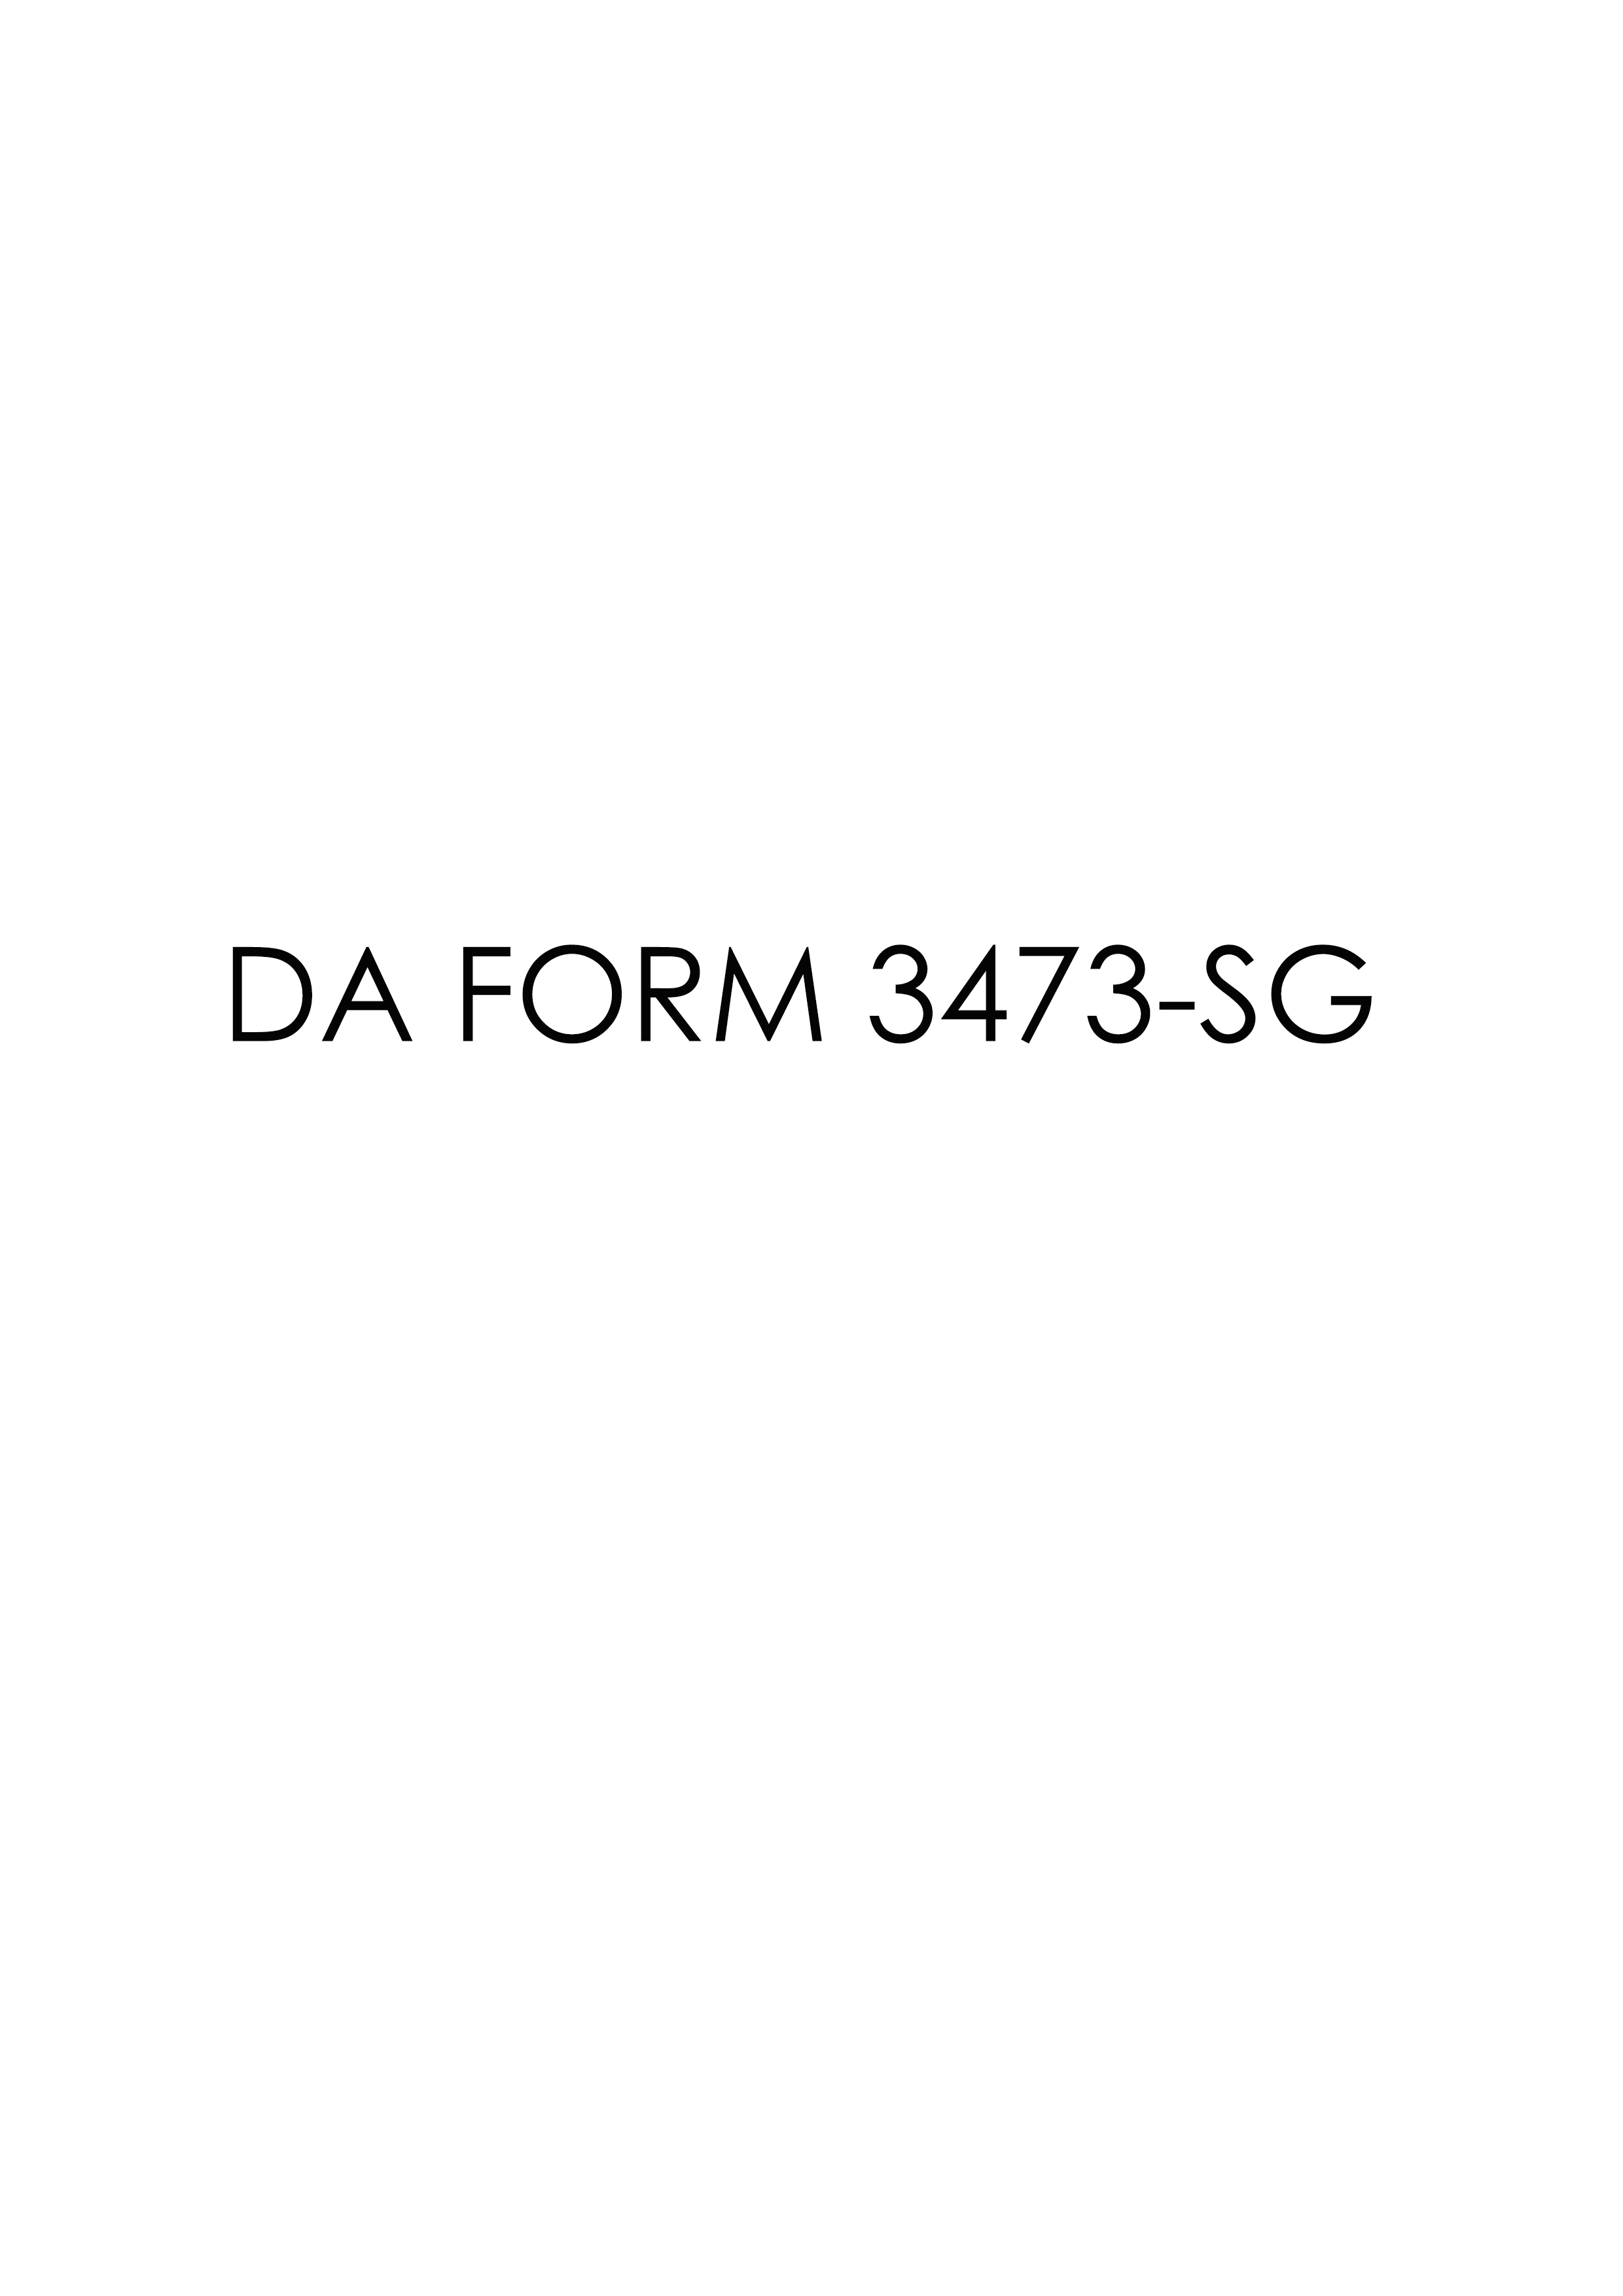 da Form 3473-SG fillable